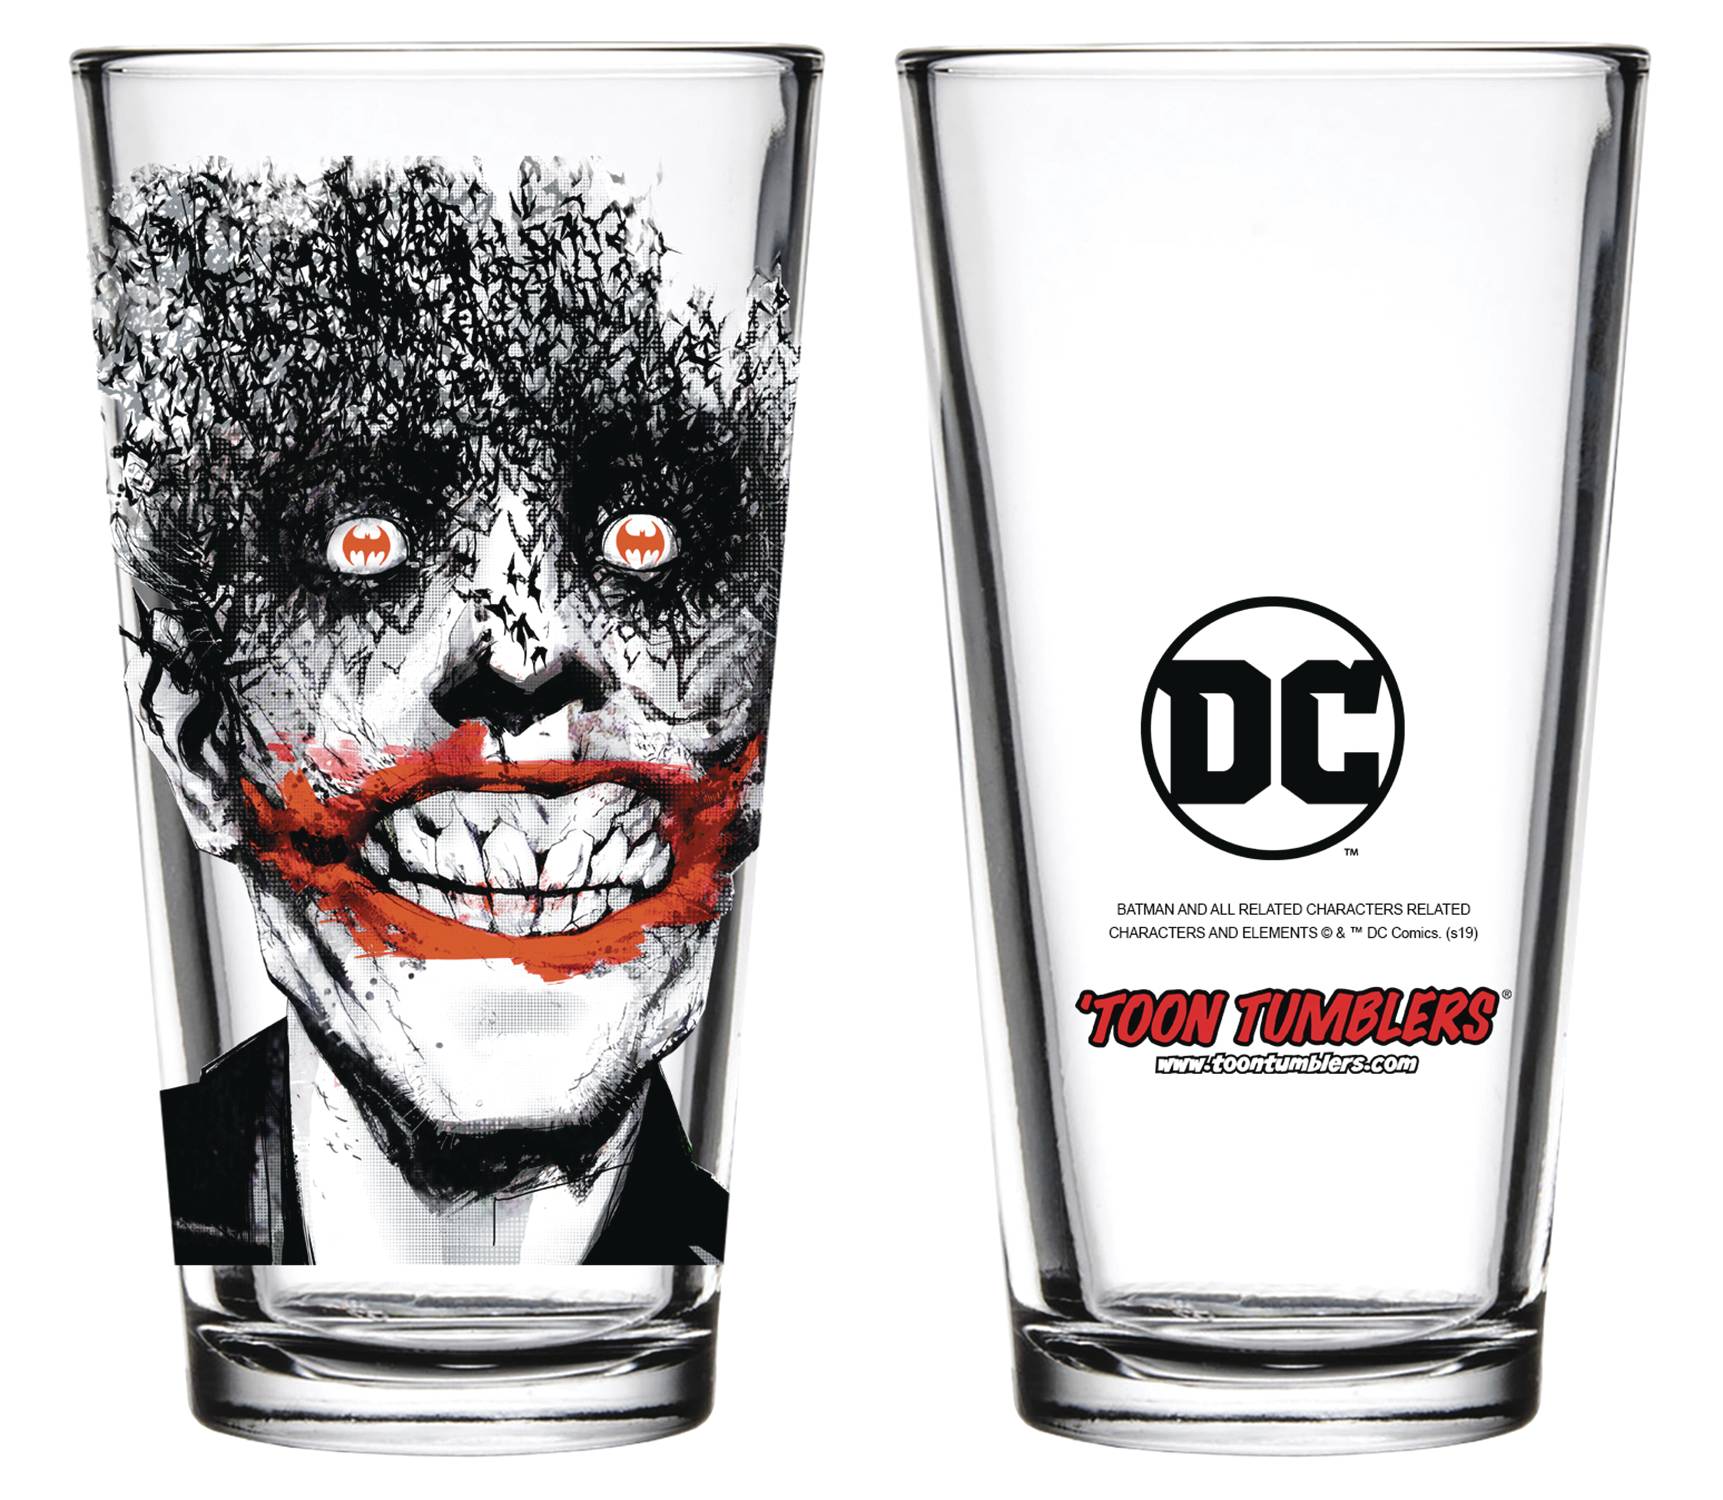 Toon Tumblers DC Joker Bats Glass